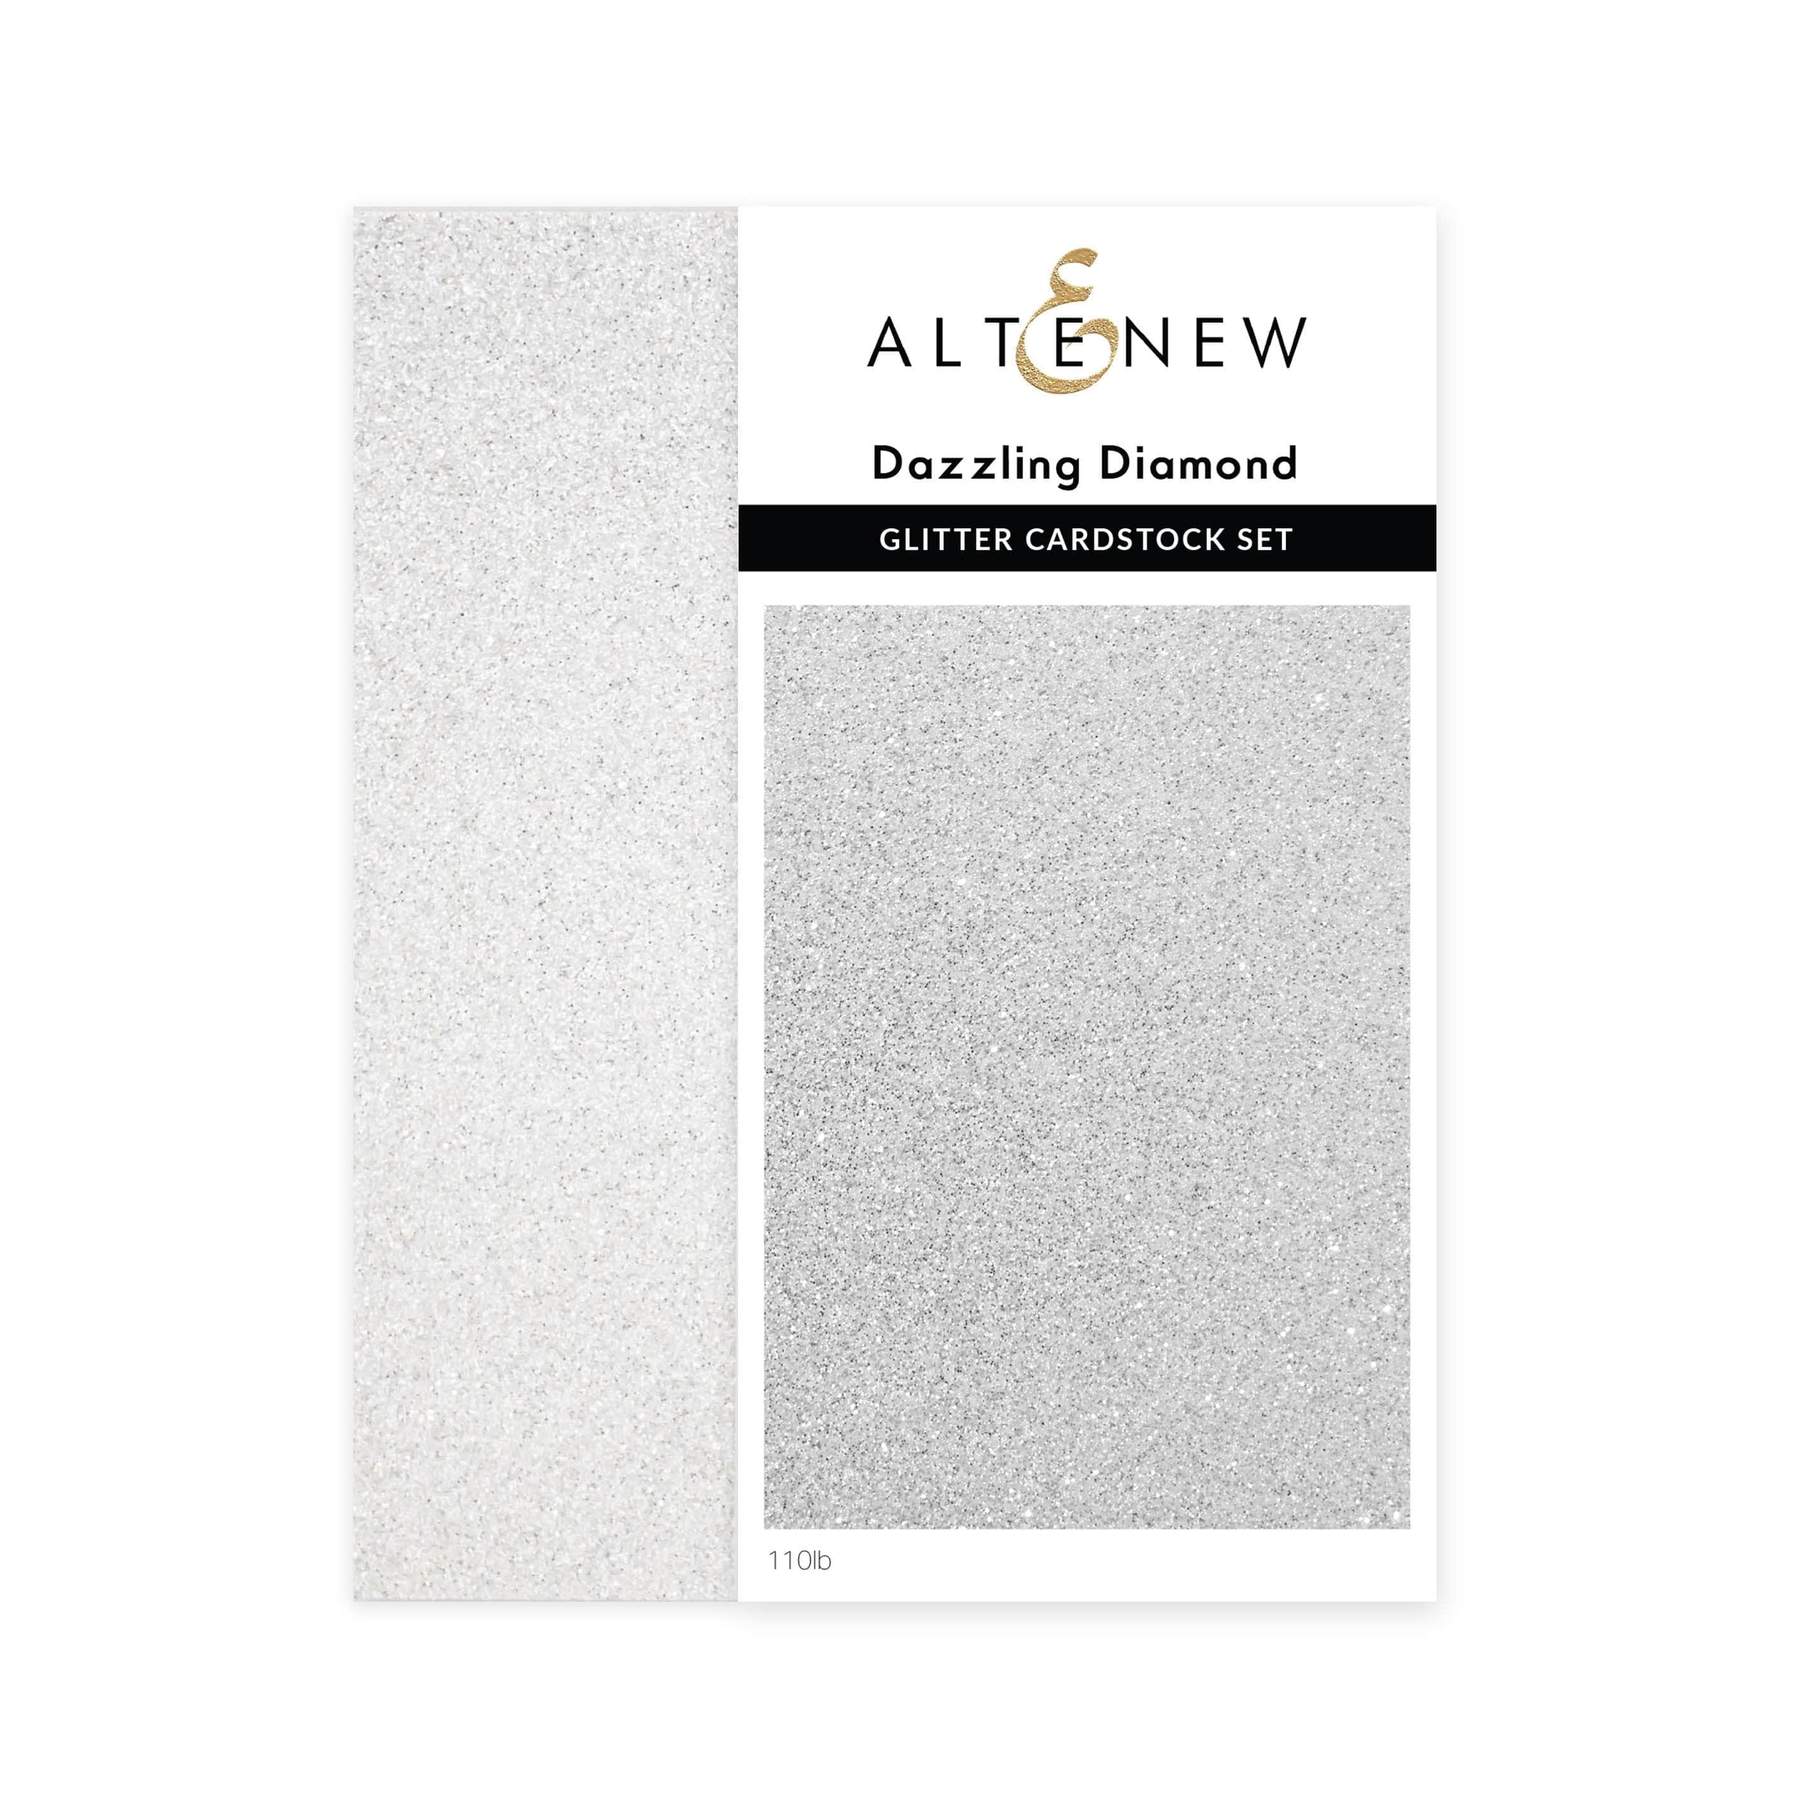 Altenew - Glitter Cardstock Set - Dazzling Diamond